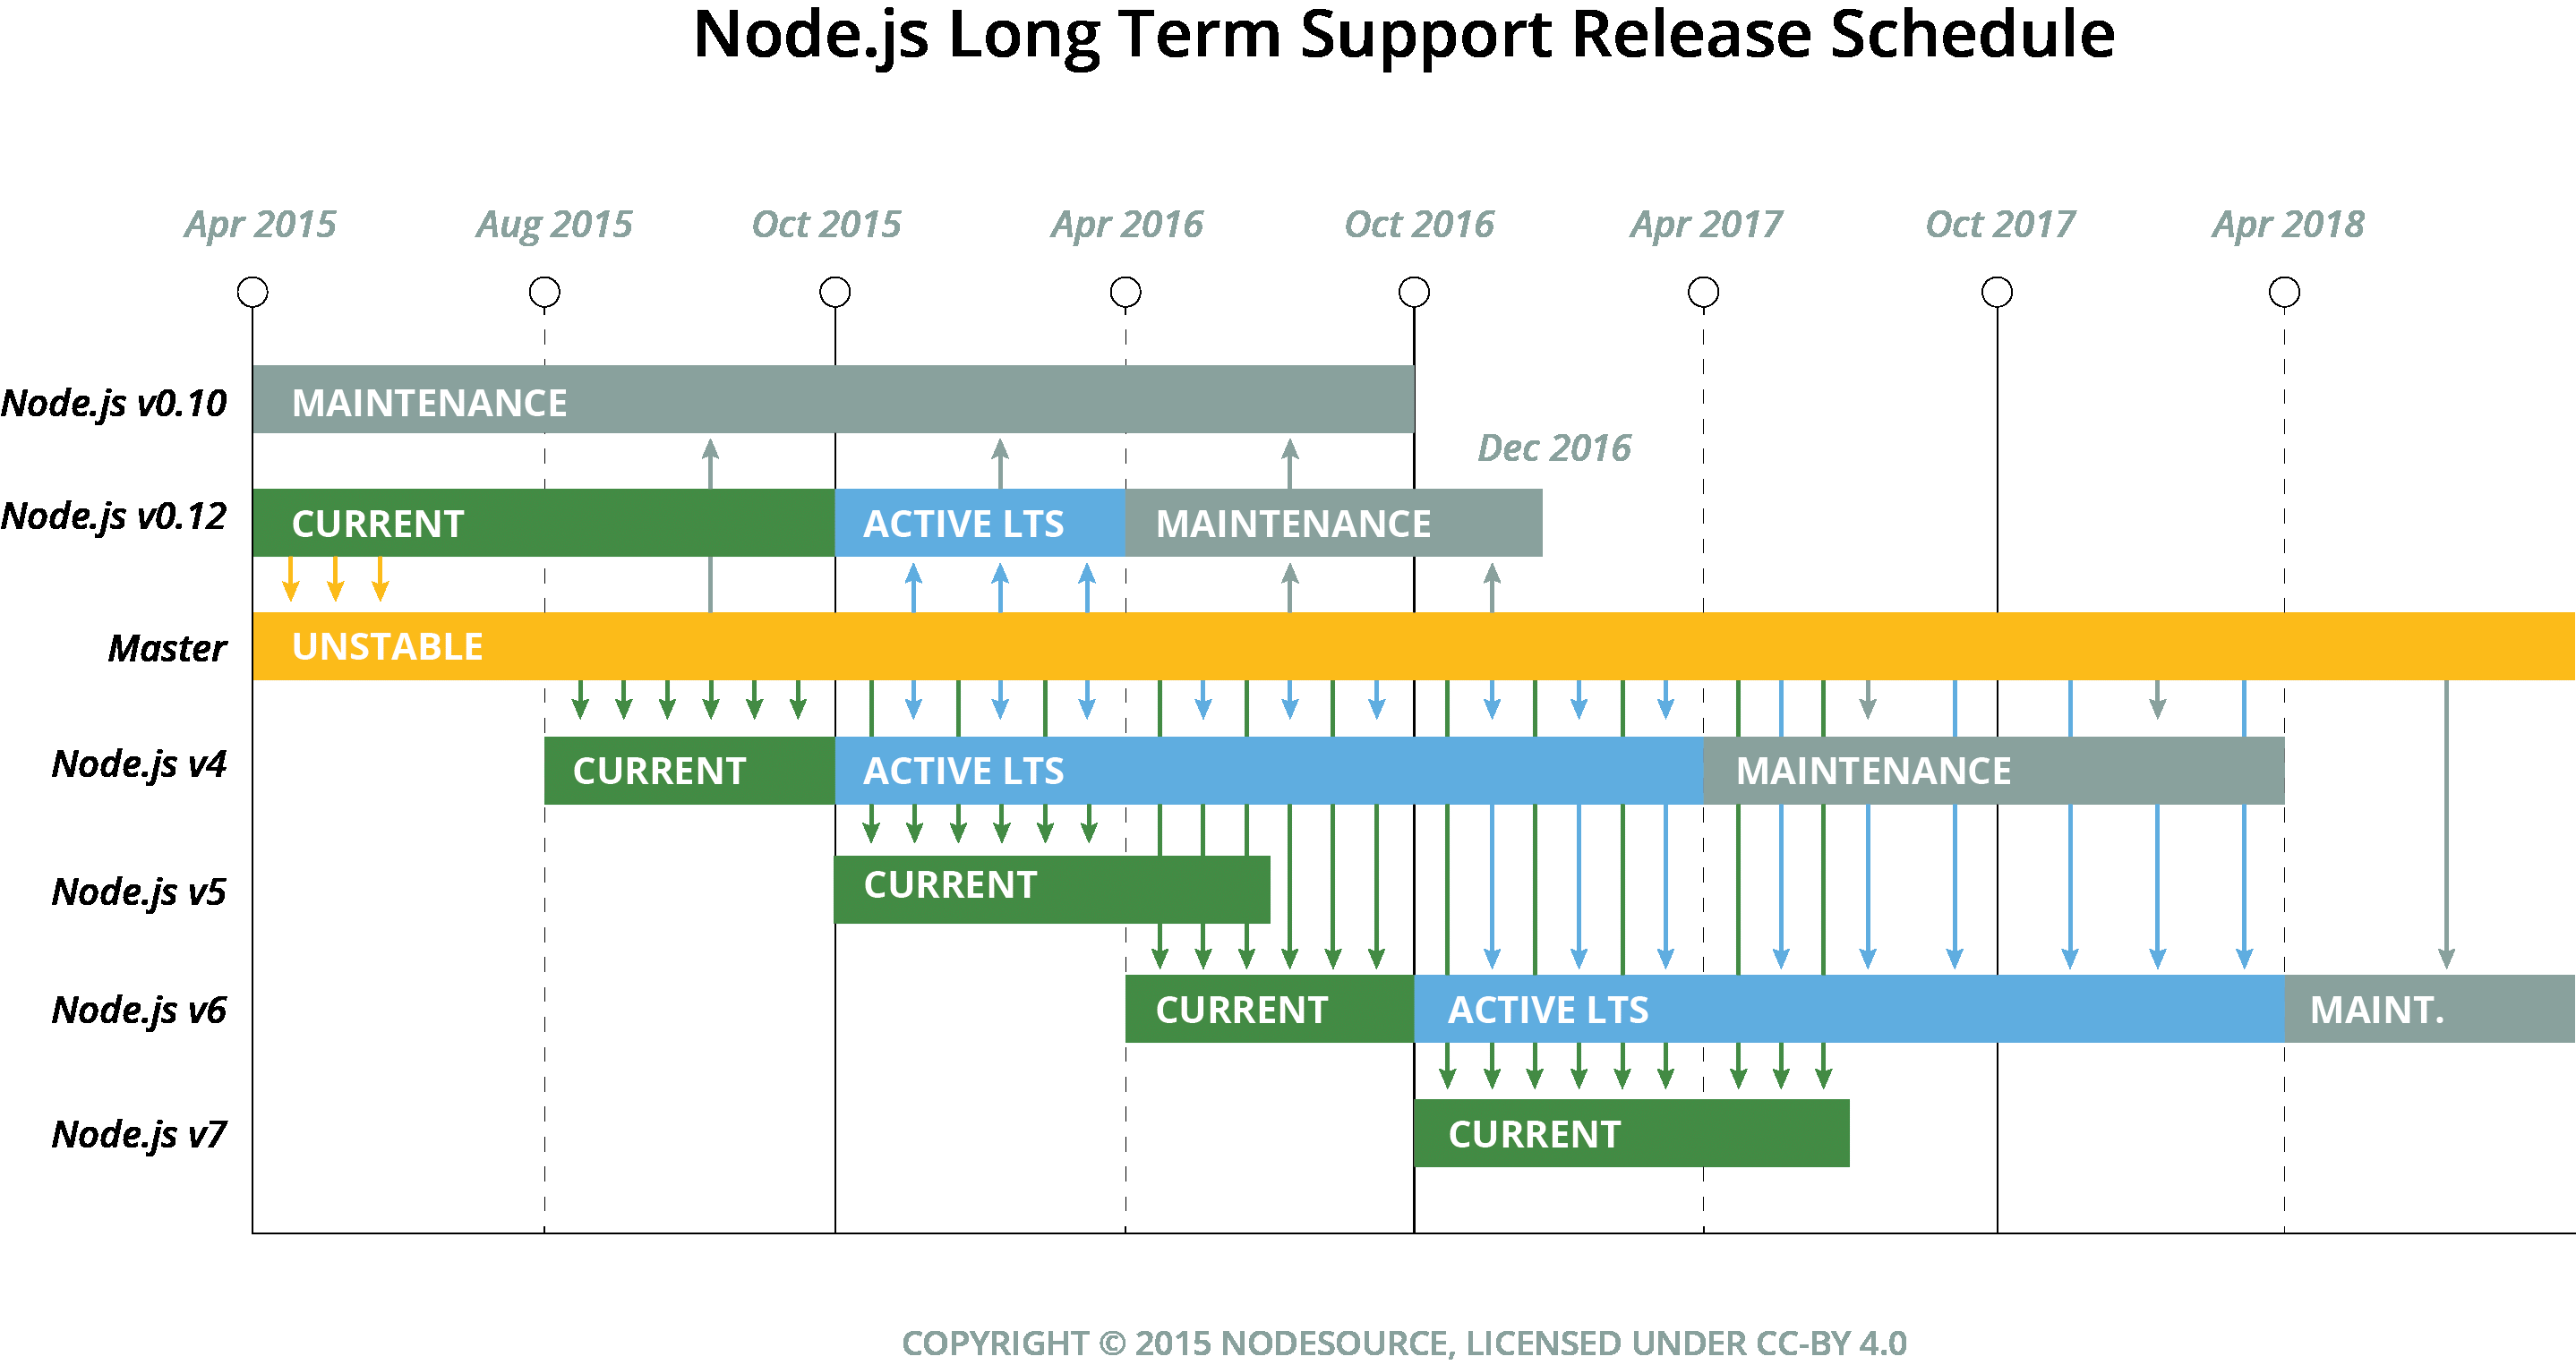 Node.jsLTSXPW[摜GitHub́unodejs/LTSNode.js Long-term Support Working Groupvschedule.pngBCOPYRIGHT (C) 2015 NODESOURCE, LICENSED UNDER CC-BY 4.0